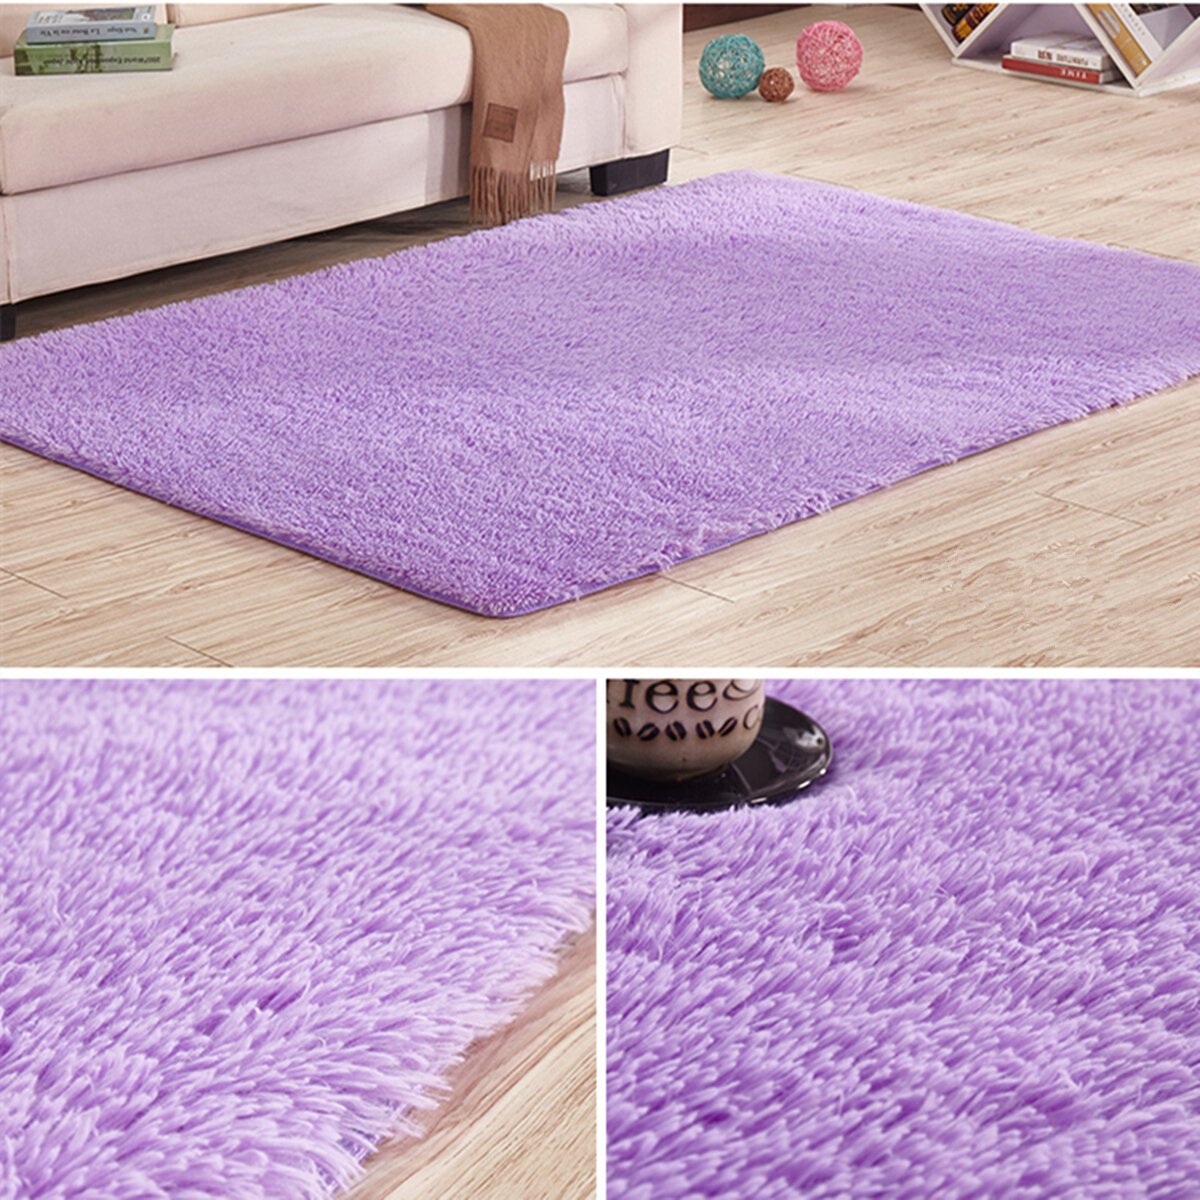 3 Sizes Purple Fluffy Rugs Anti-Skid Shaggy Area Rug Floor Mat Dining Room Home Bedroom Carpet